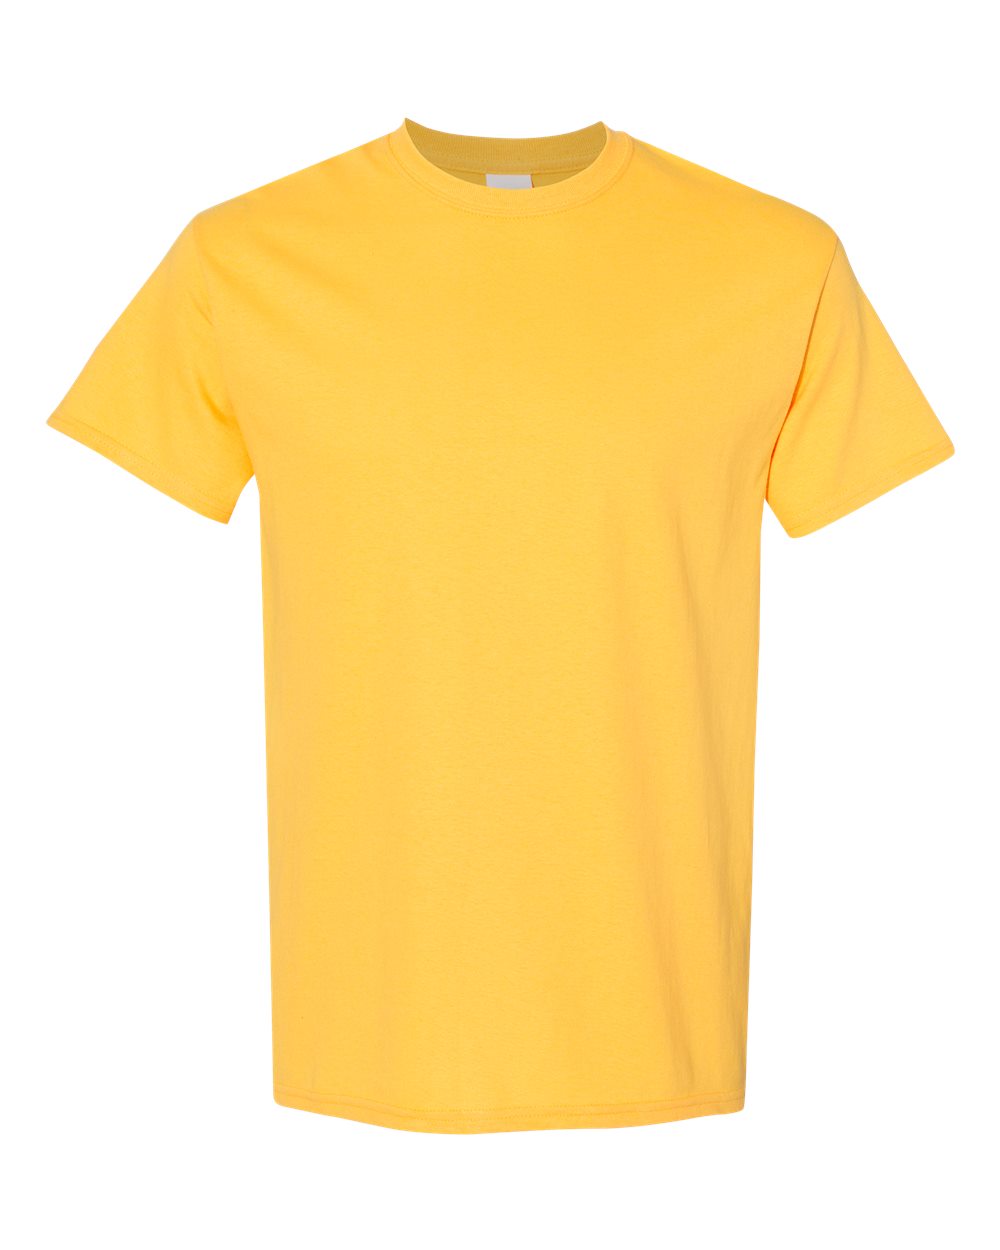 Gildan 5000 Adult Shirt - Small